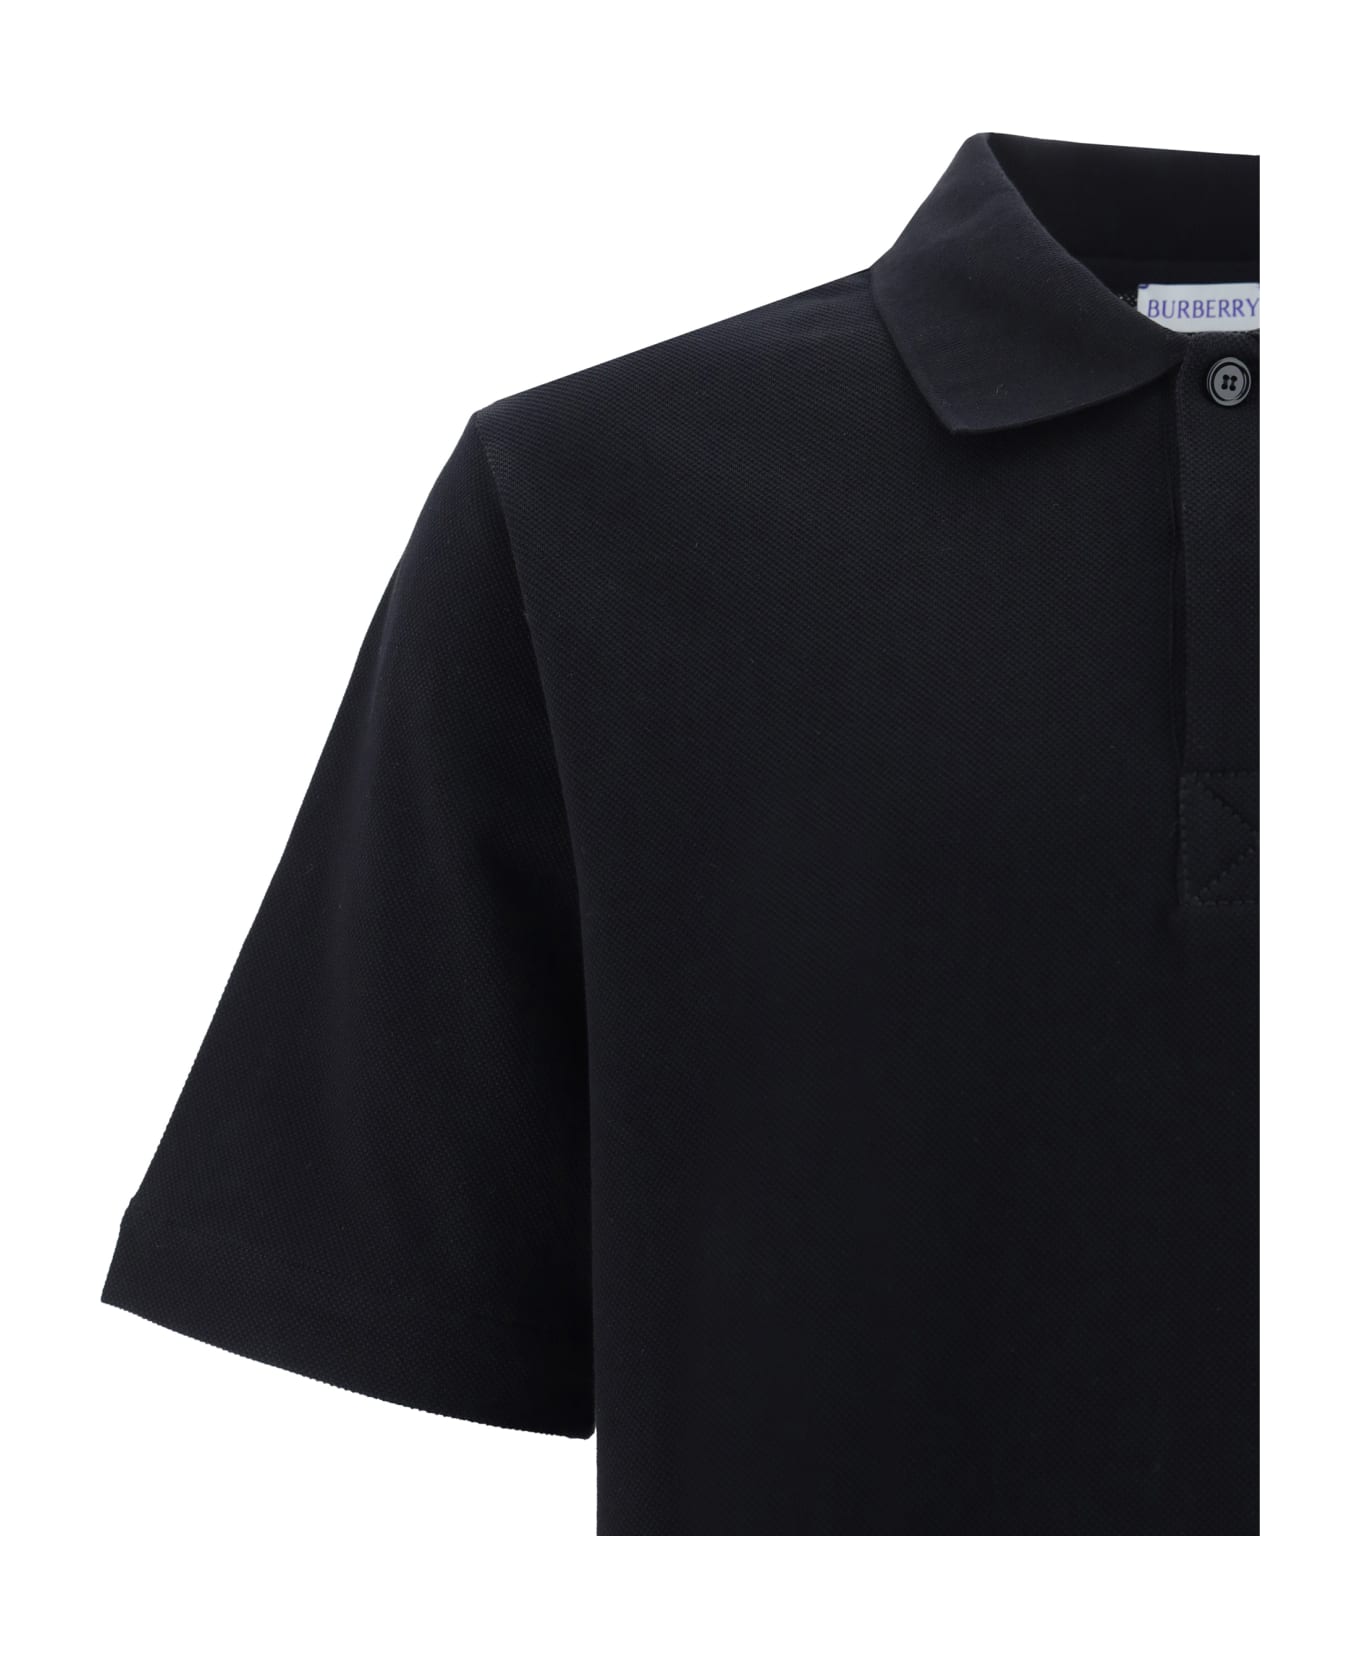 Burberry Black Cotton Polo Shirt - Black